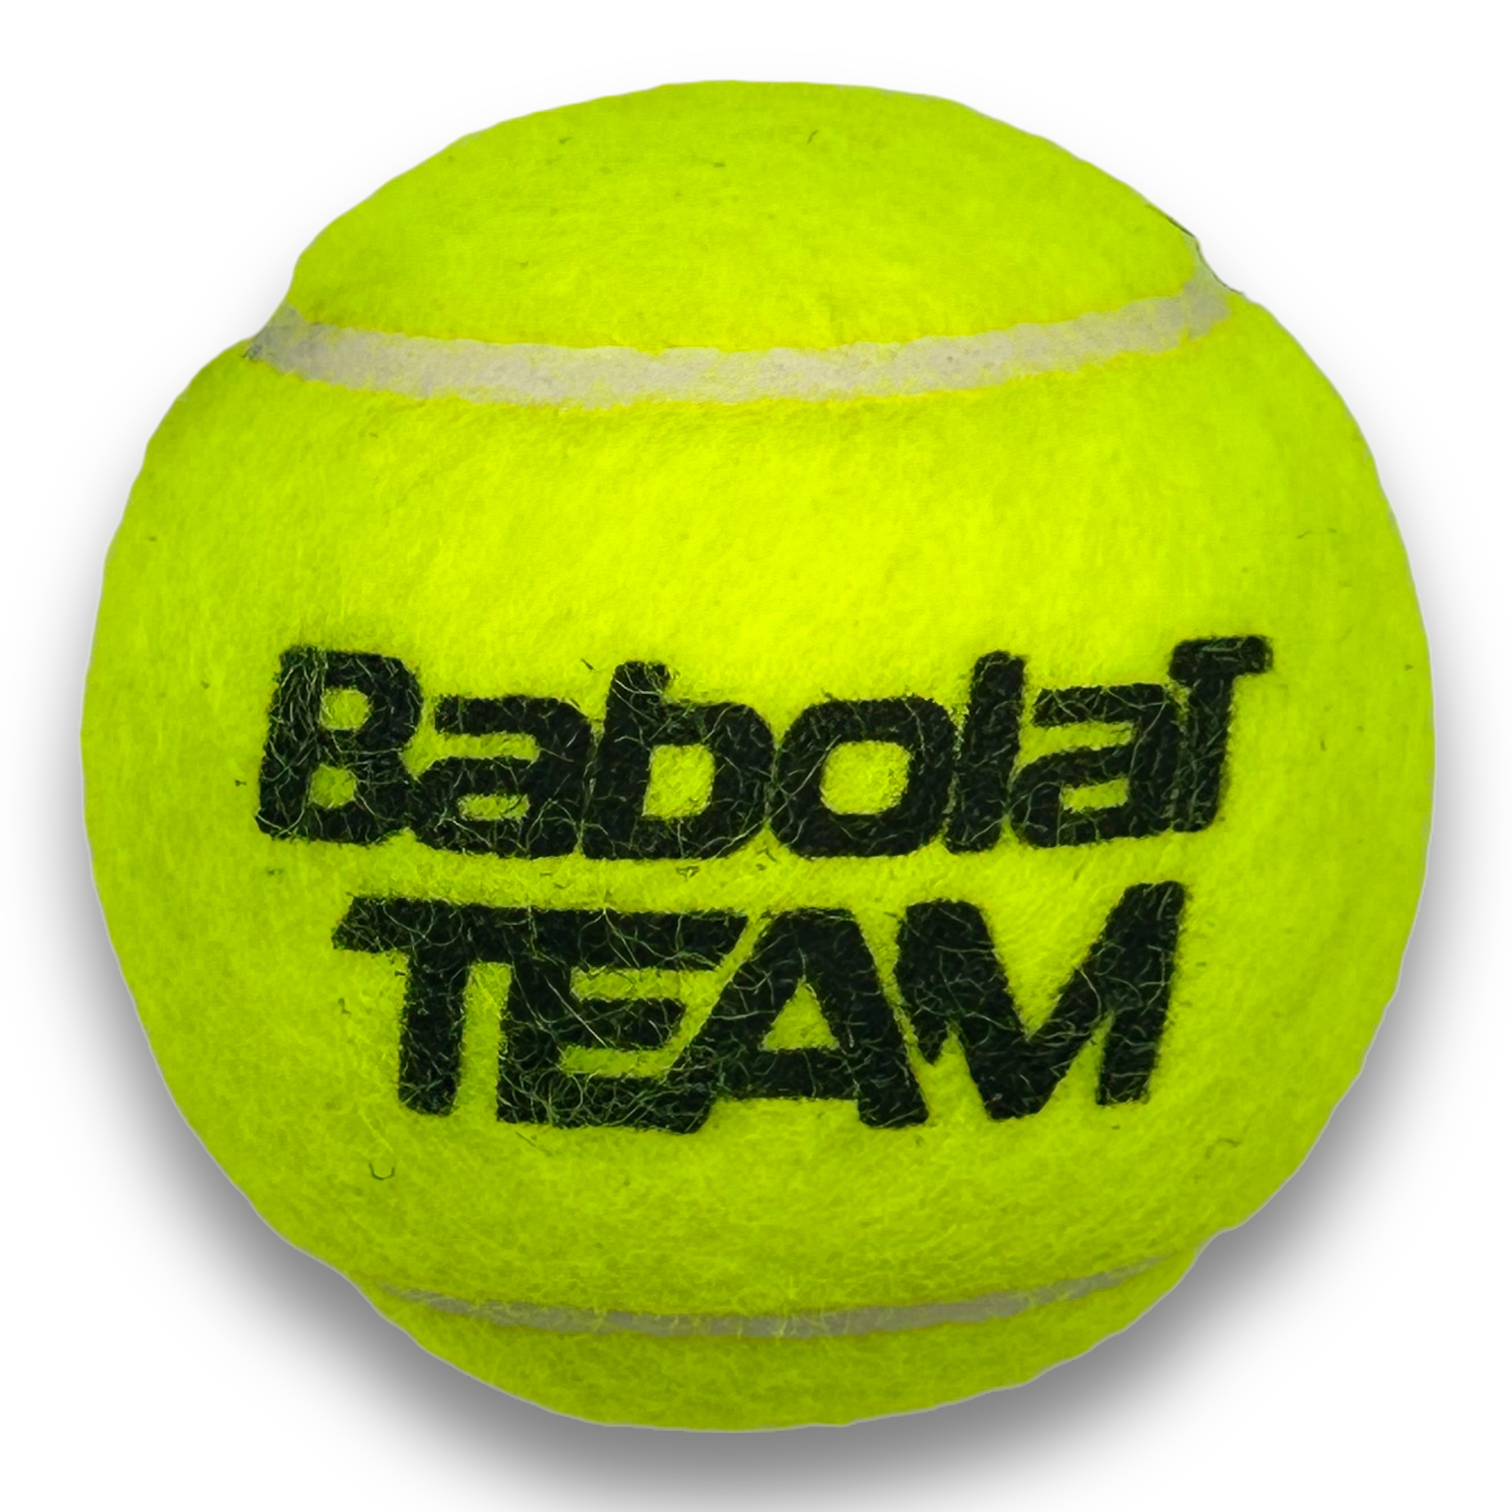 NAOMI OSAKA SIGNED TEAM BABOLAT TENNIS BALL (AFTAL COA)